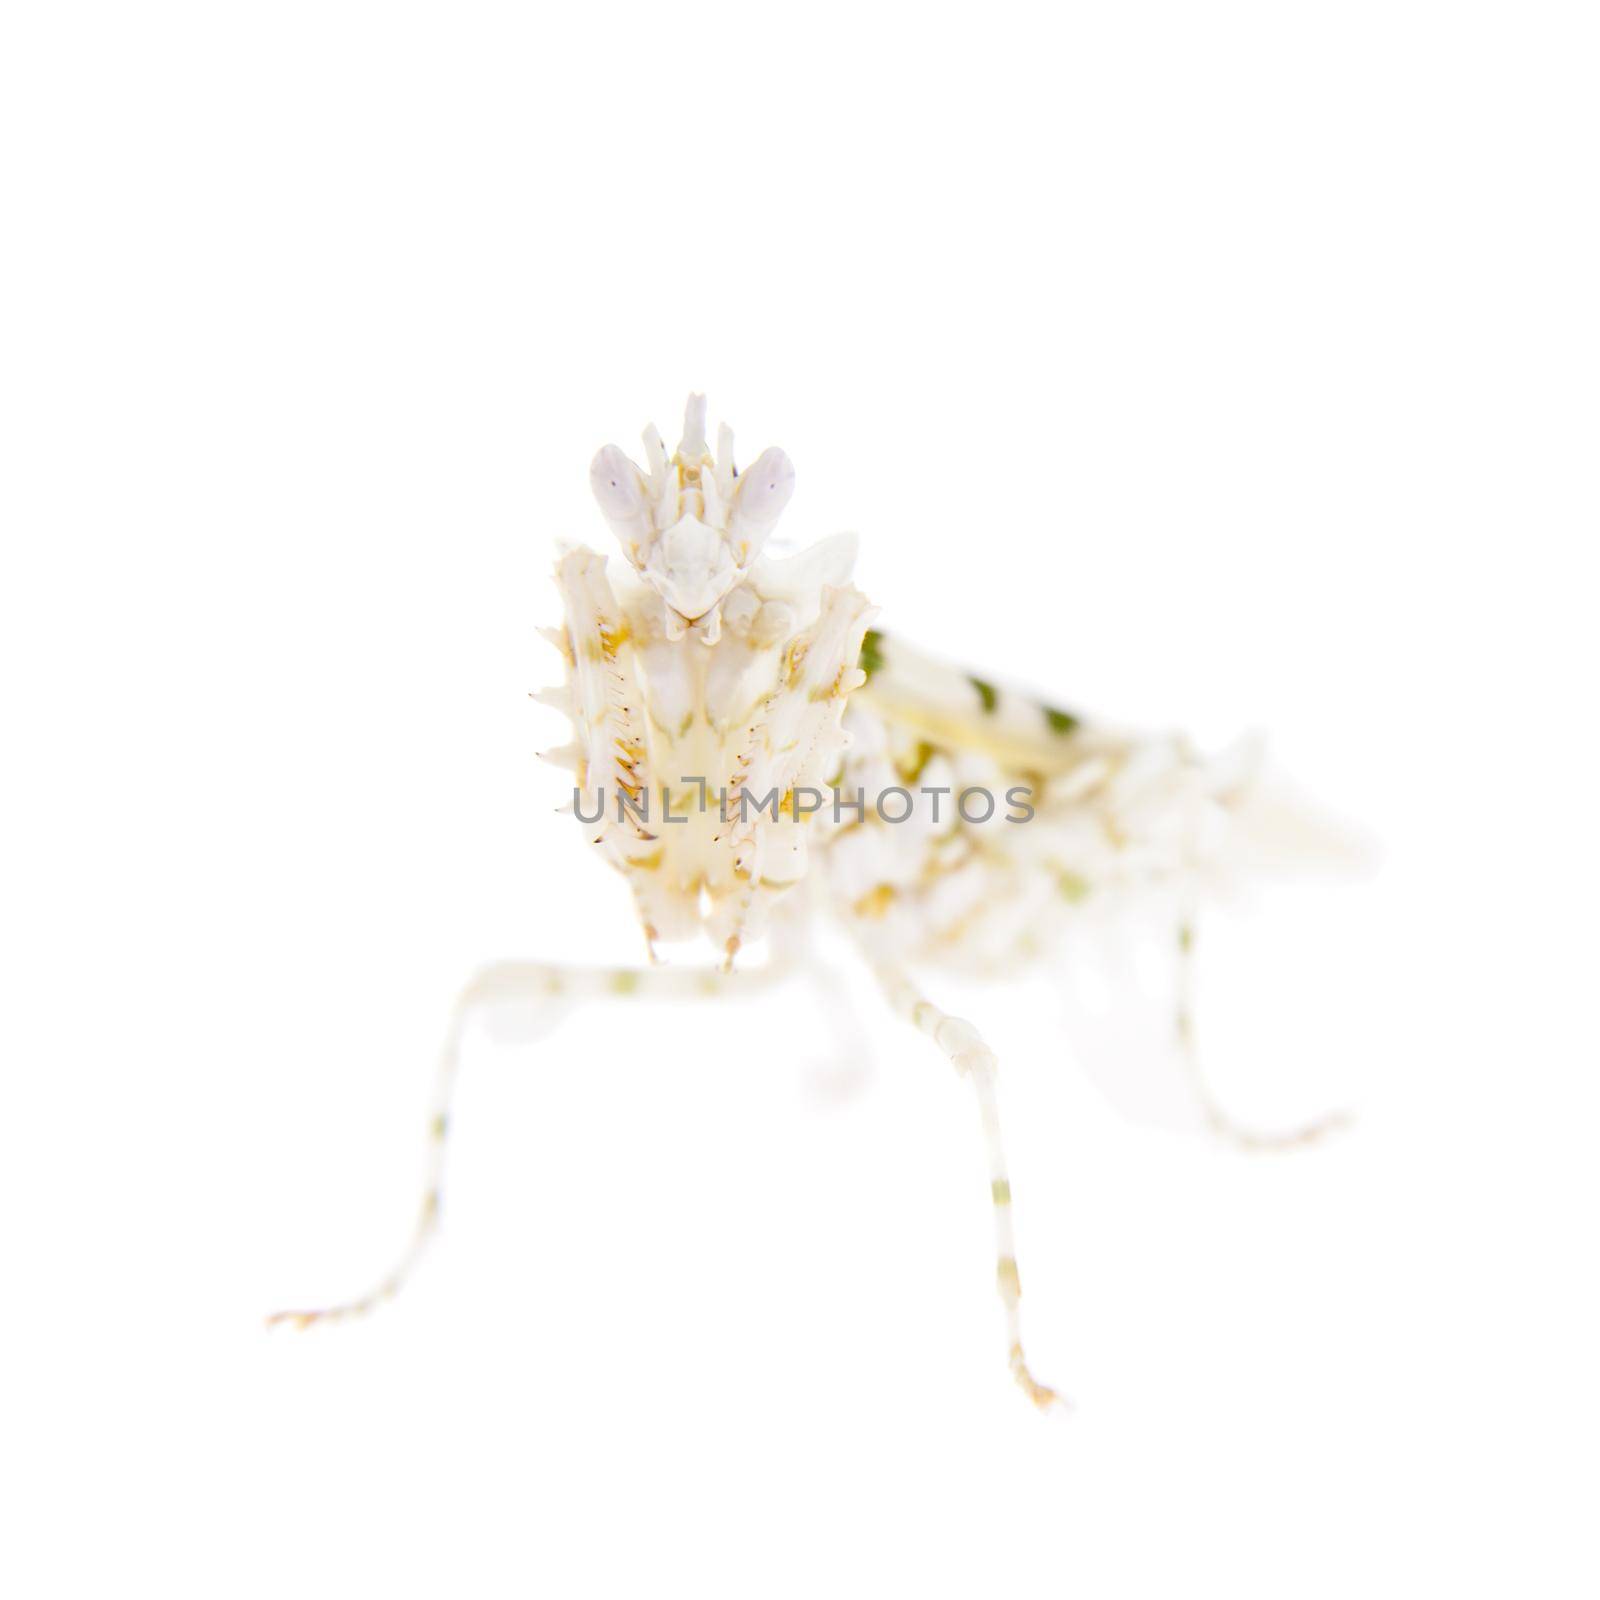 Pseudocreobotra wahlbergii, or common names Spiny flower mantis isolates on white background